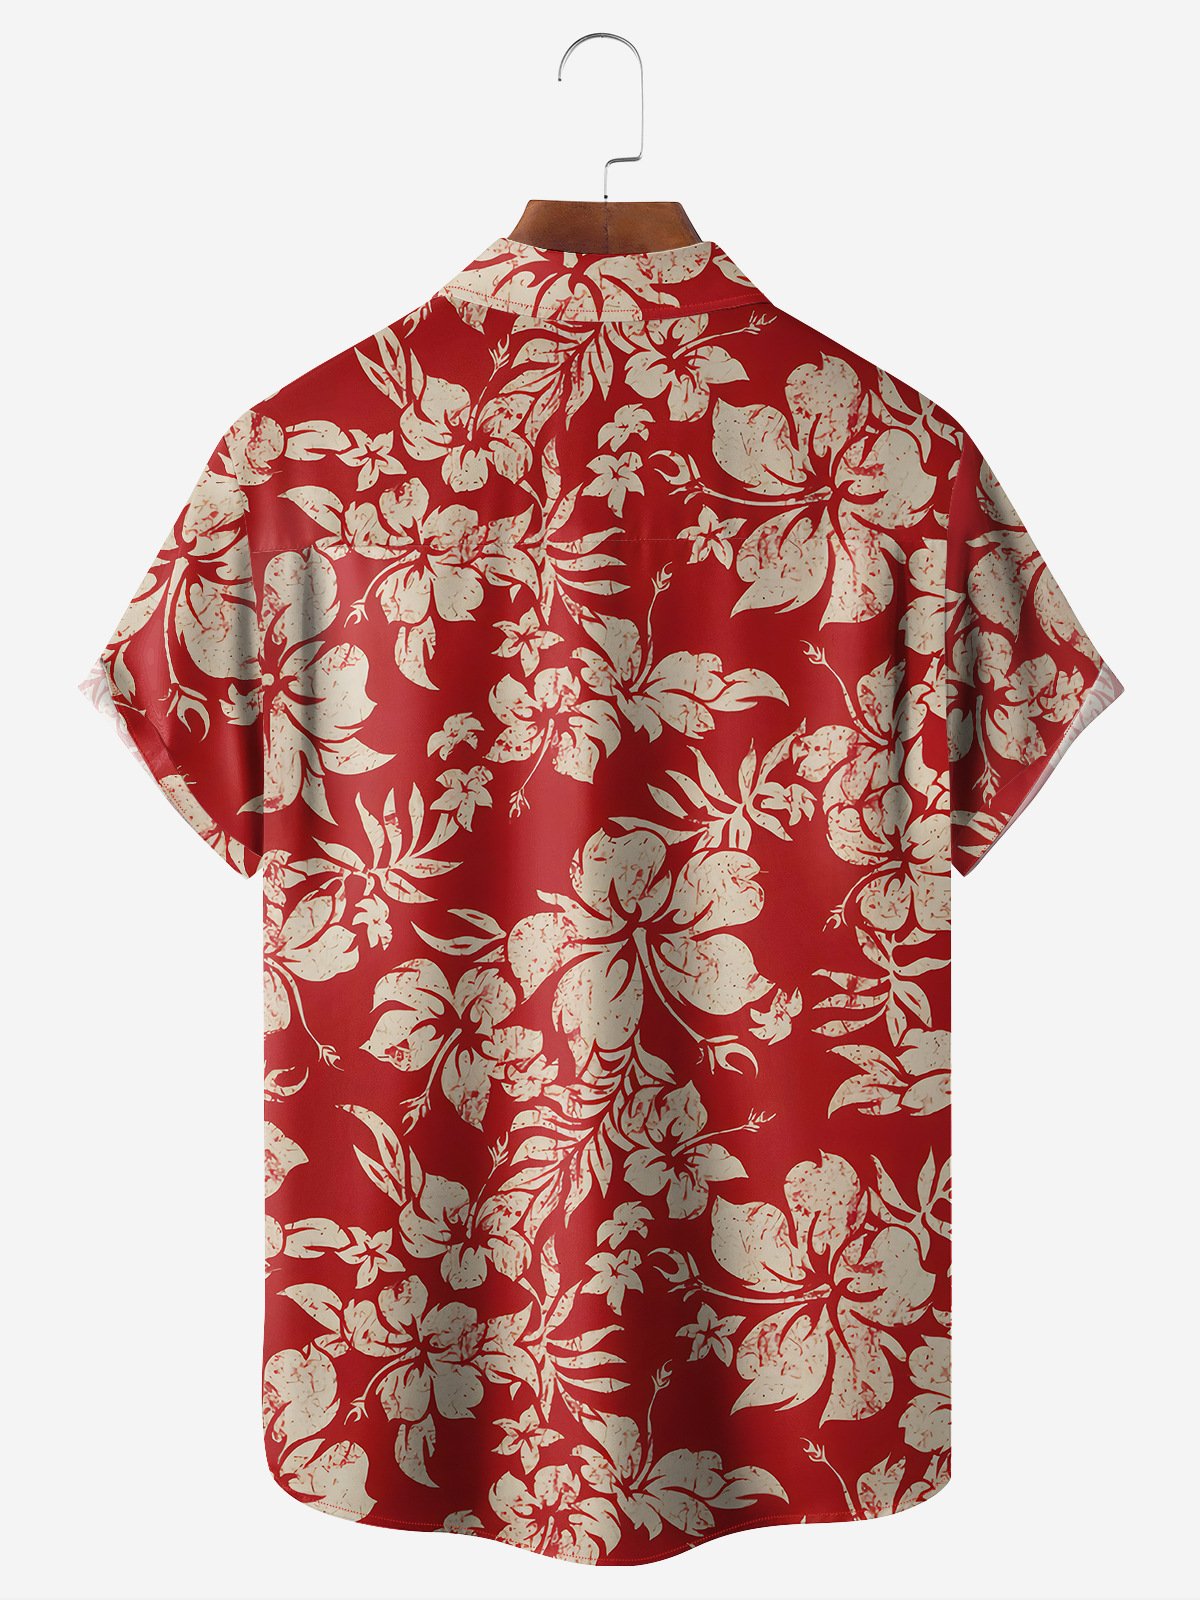 Hardaddy Holiday Style Hawaiian Series Plant Flower Leaf Element Lapel Short-Sleeved Shirt Print Top